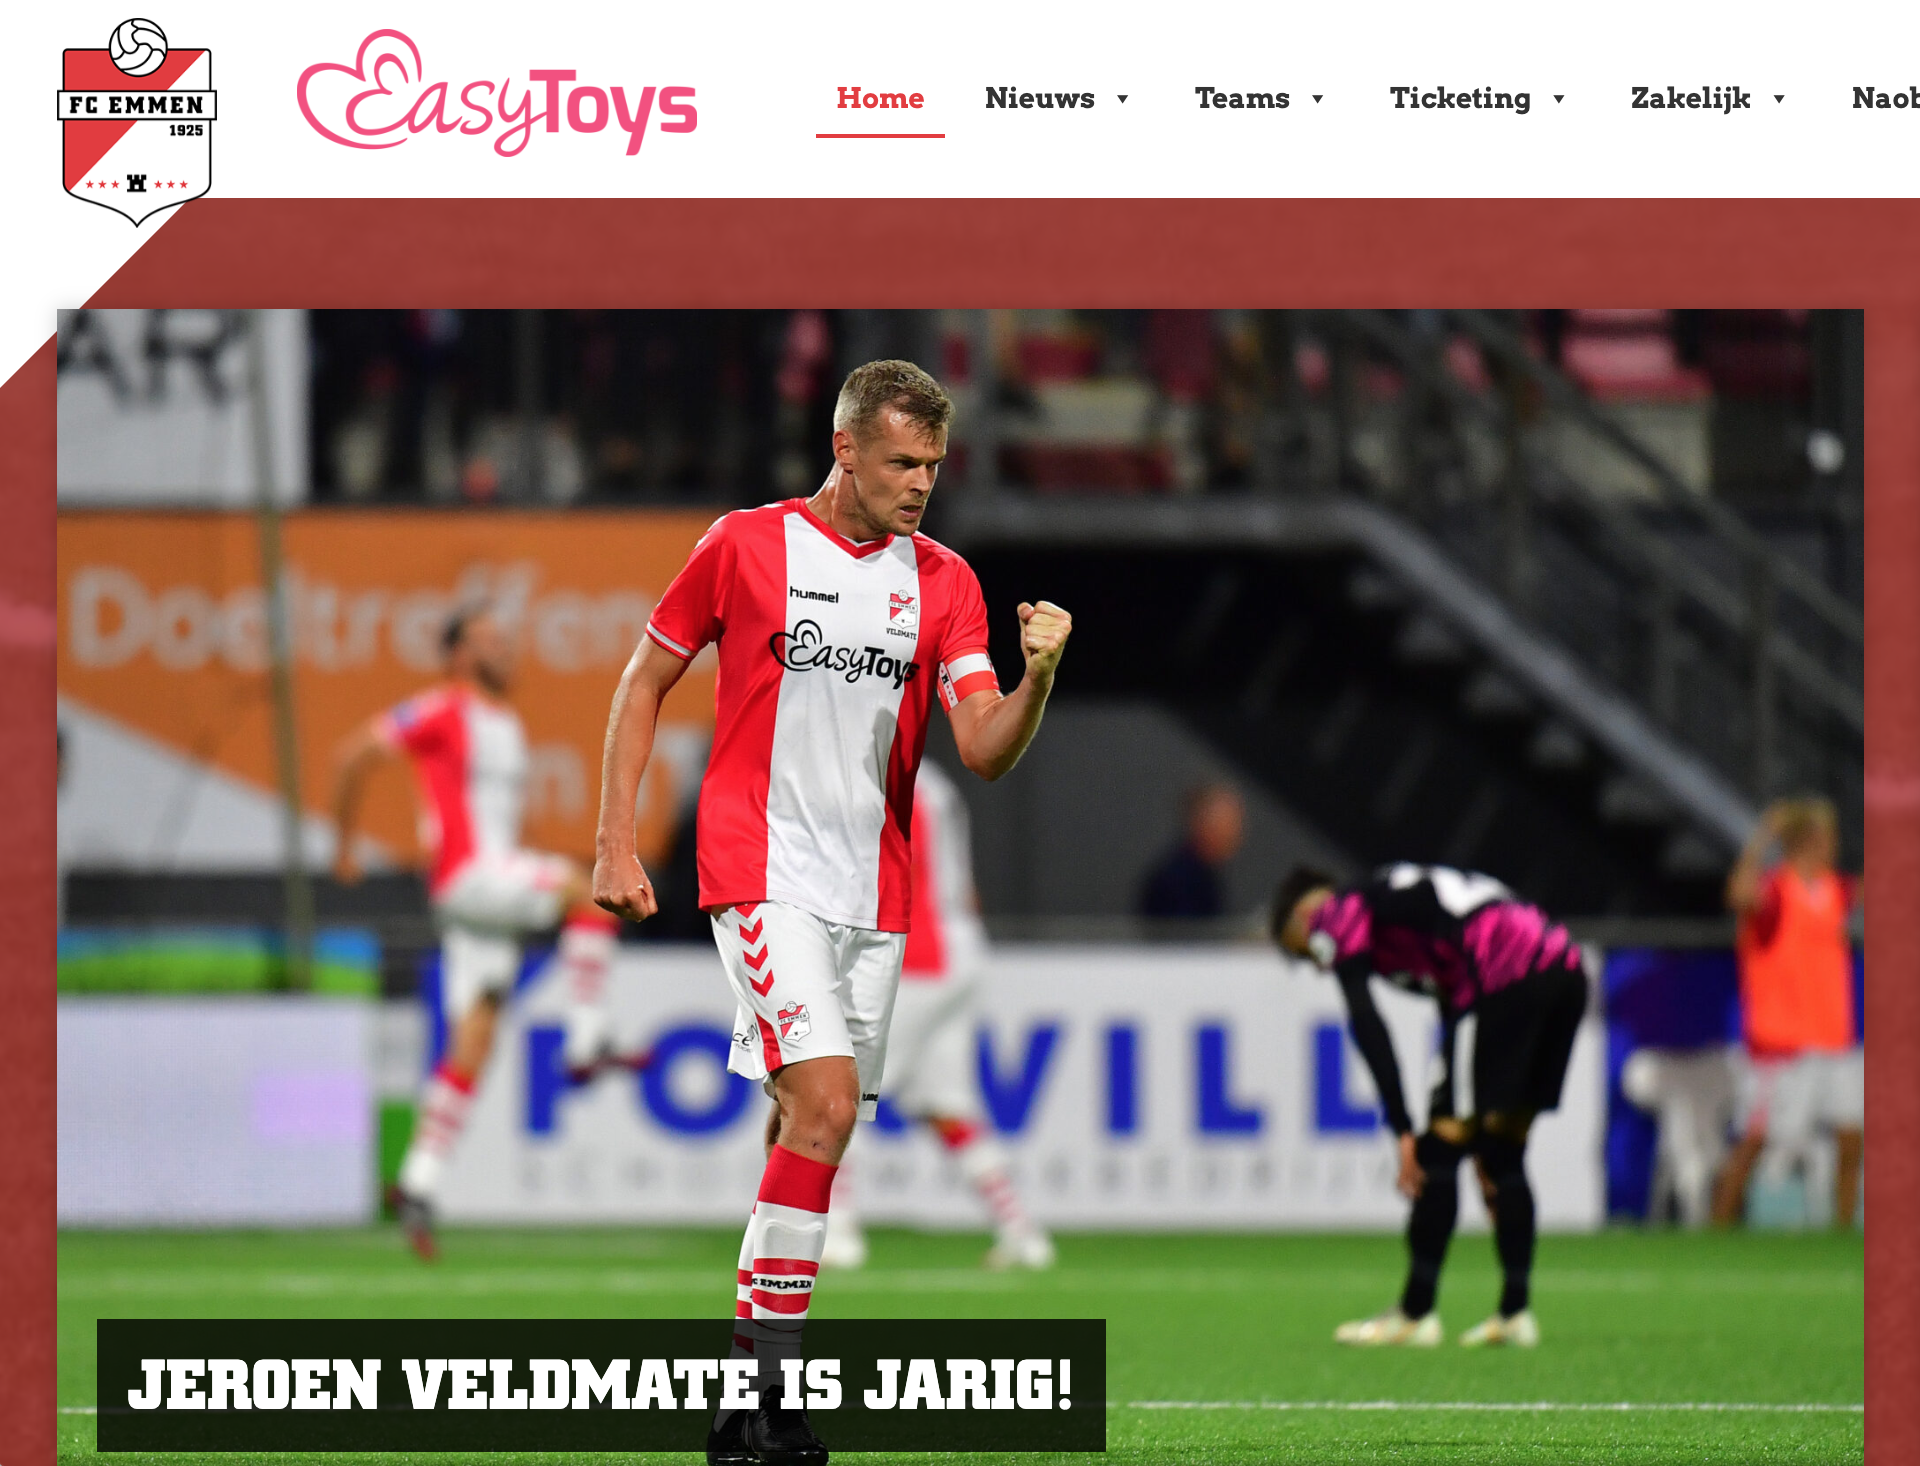 Easytoys has been the main sponsor of FC Emmen since 2020